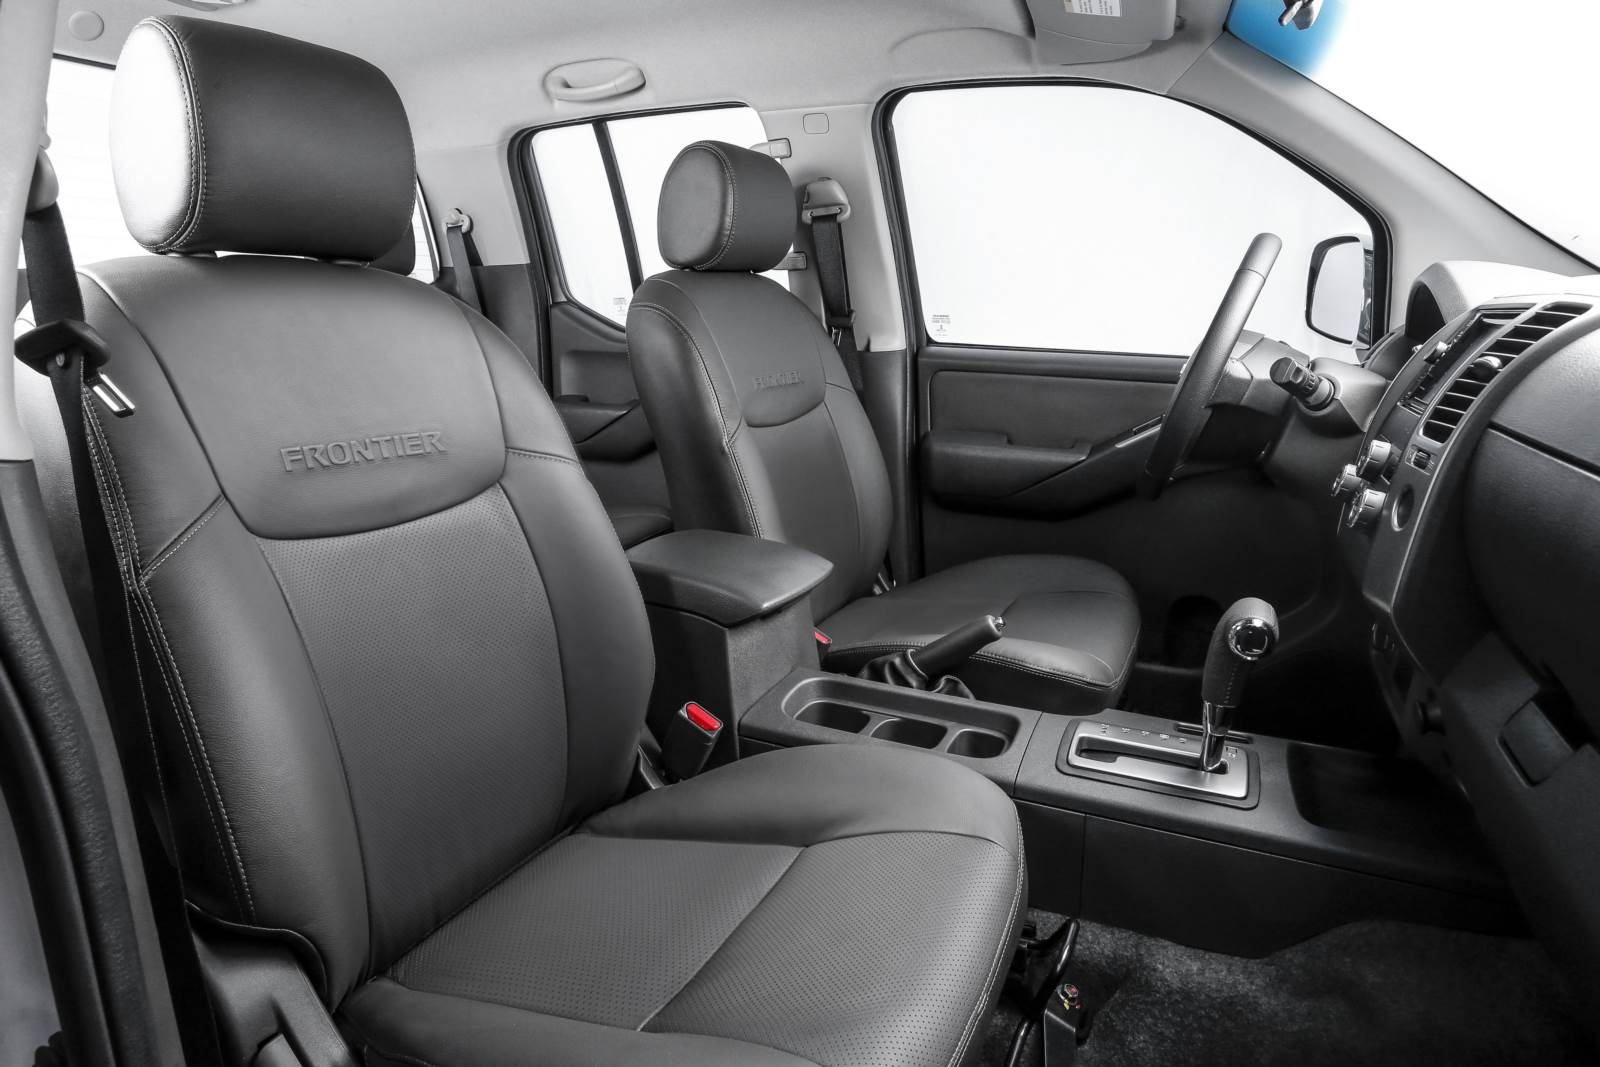 Nissan Frontier 2015 SV Attack 4x4 - interior